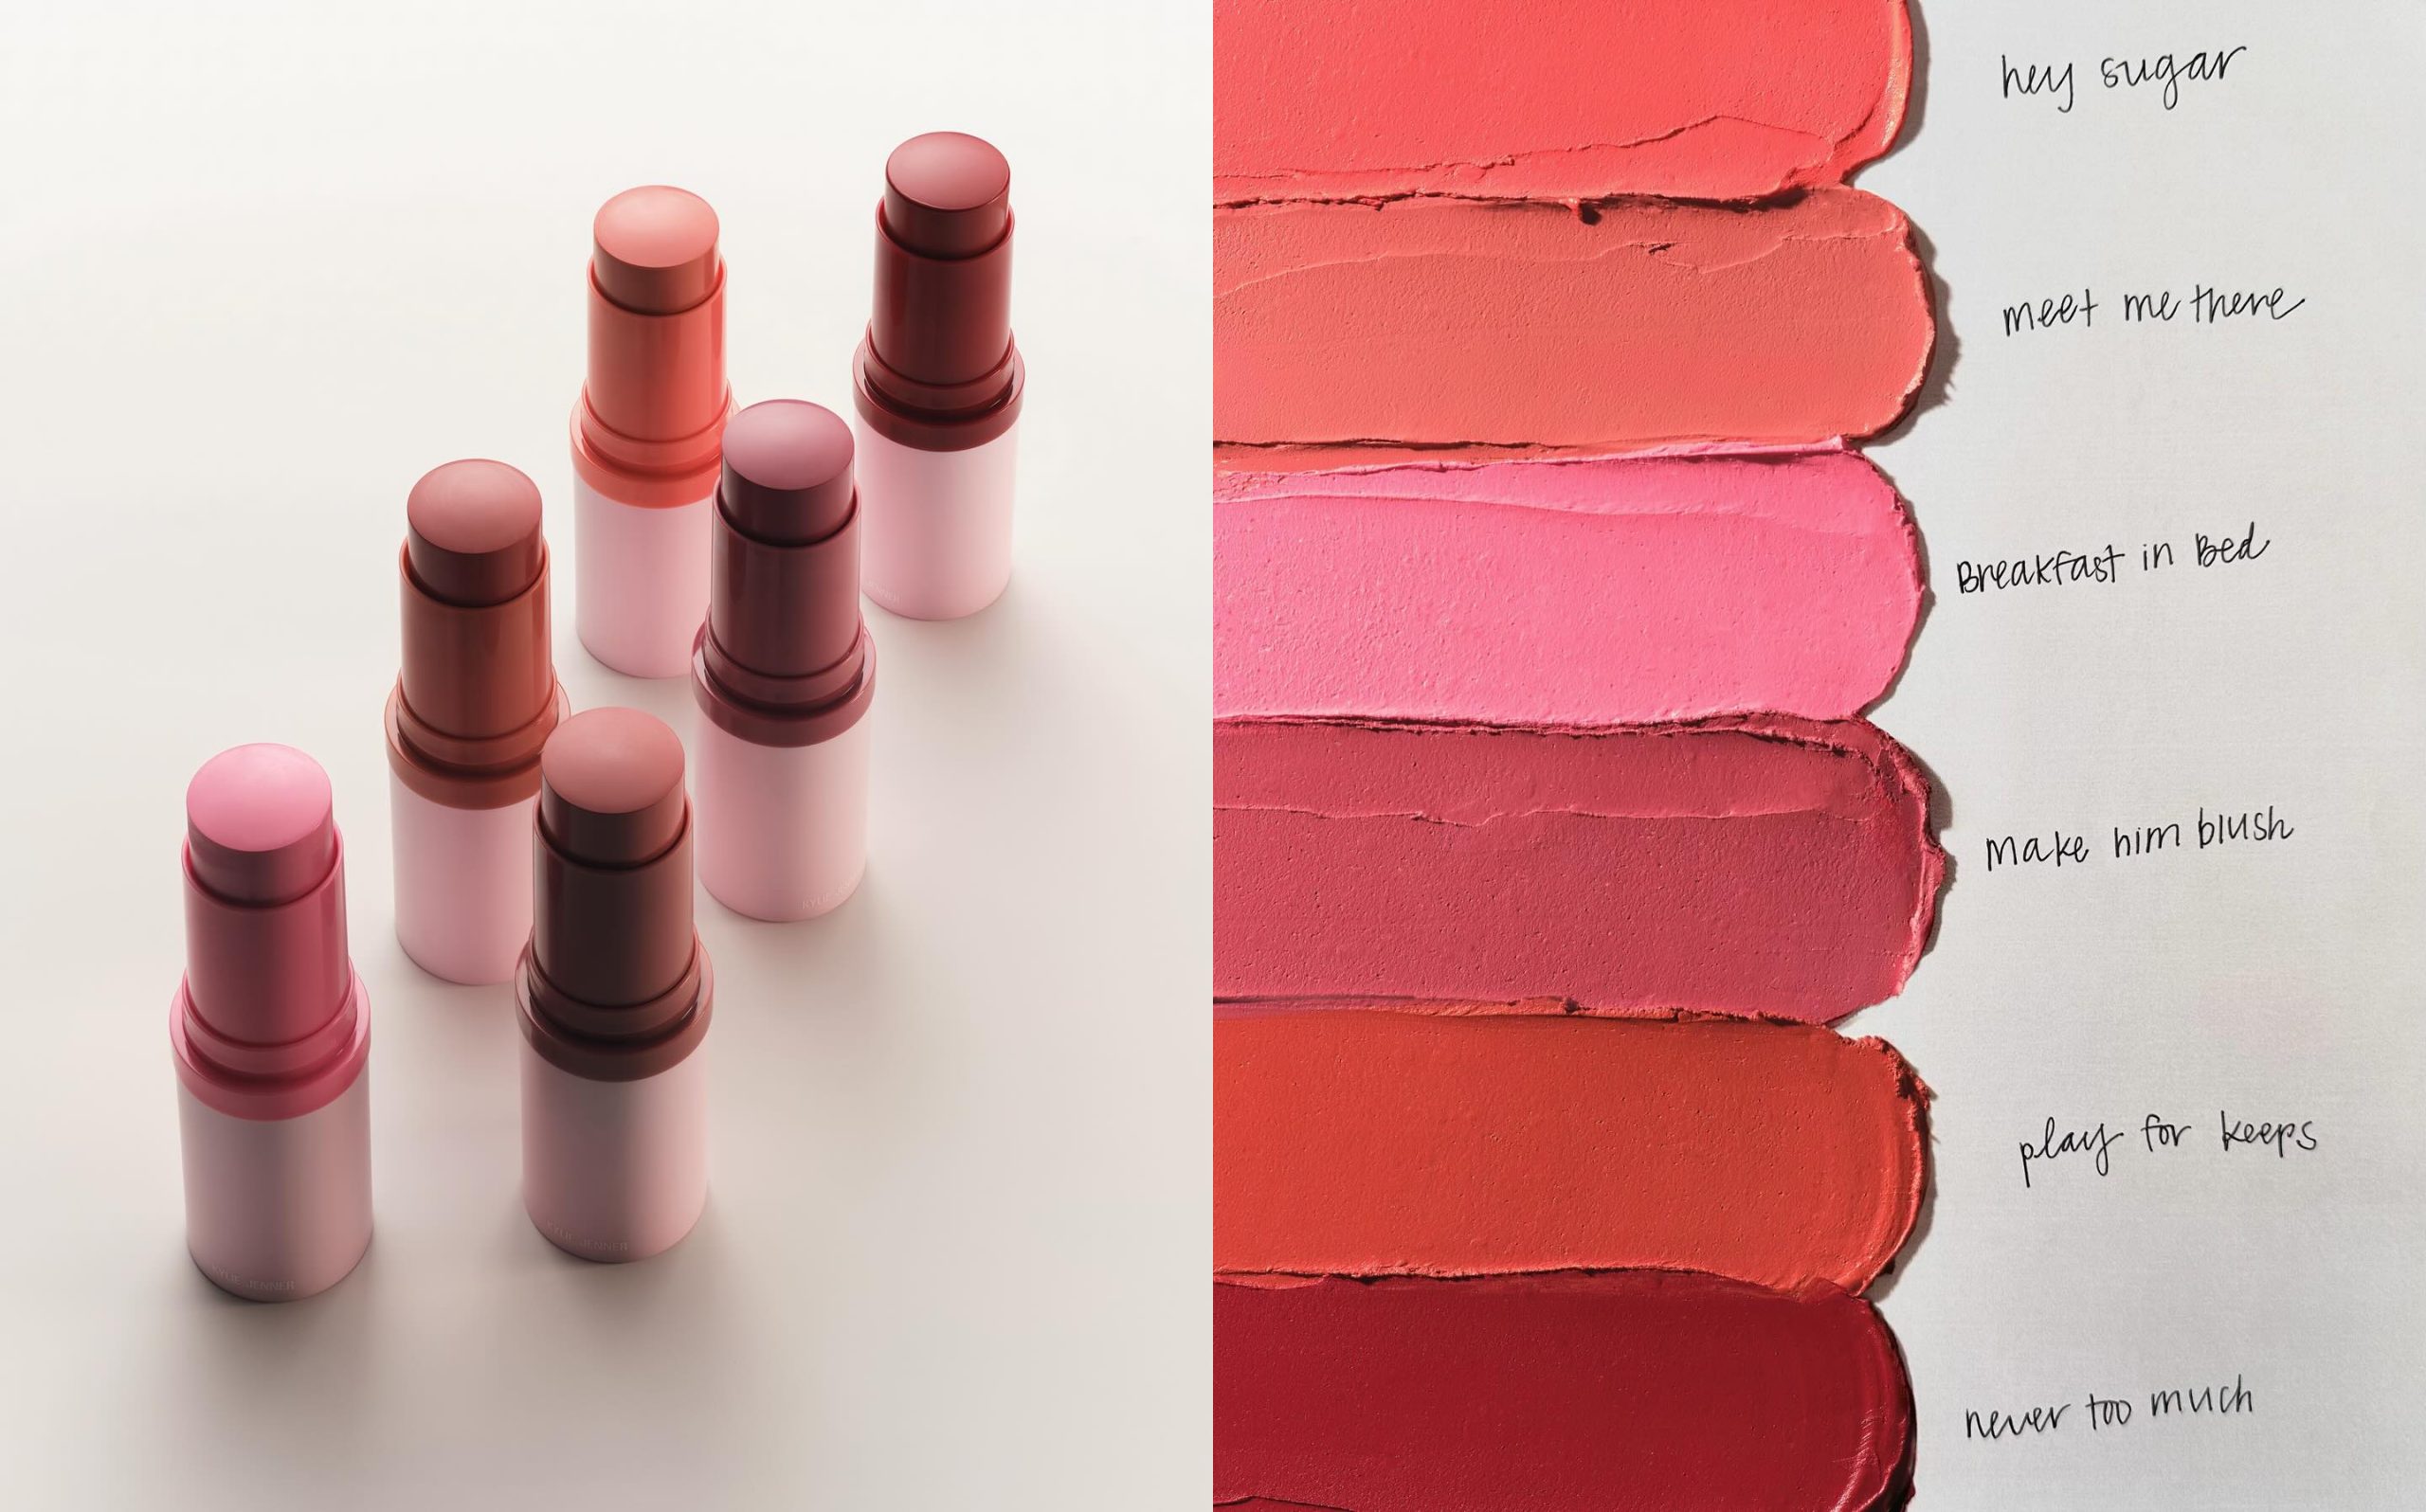 Kylie Cosmetics has announced 6 new shades of powder blush sticks